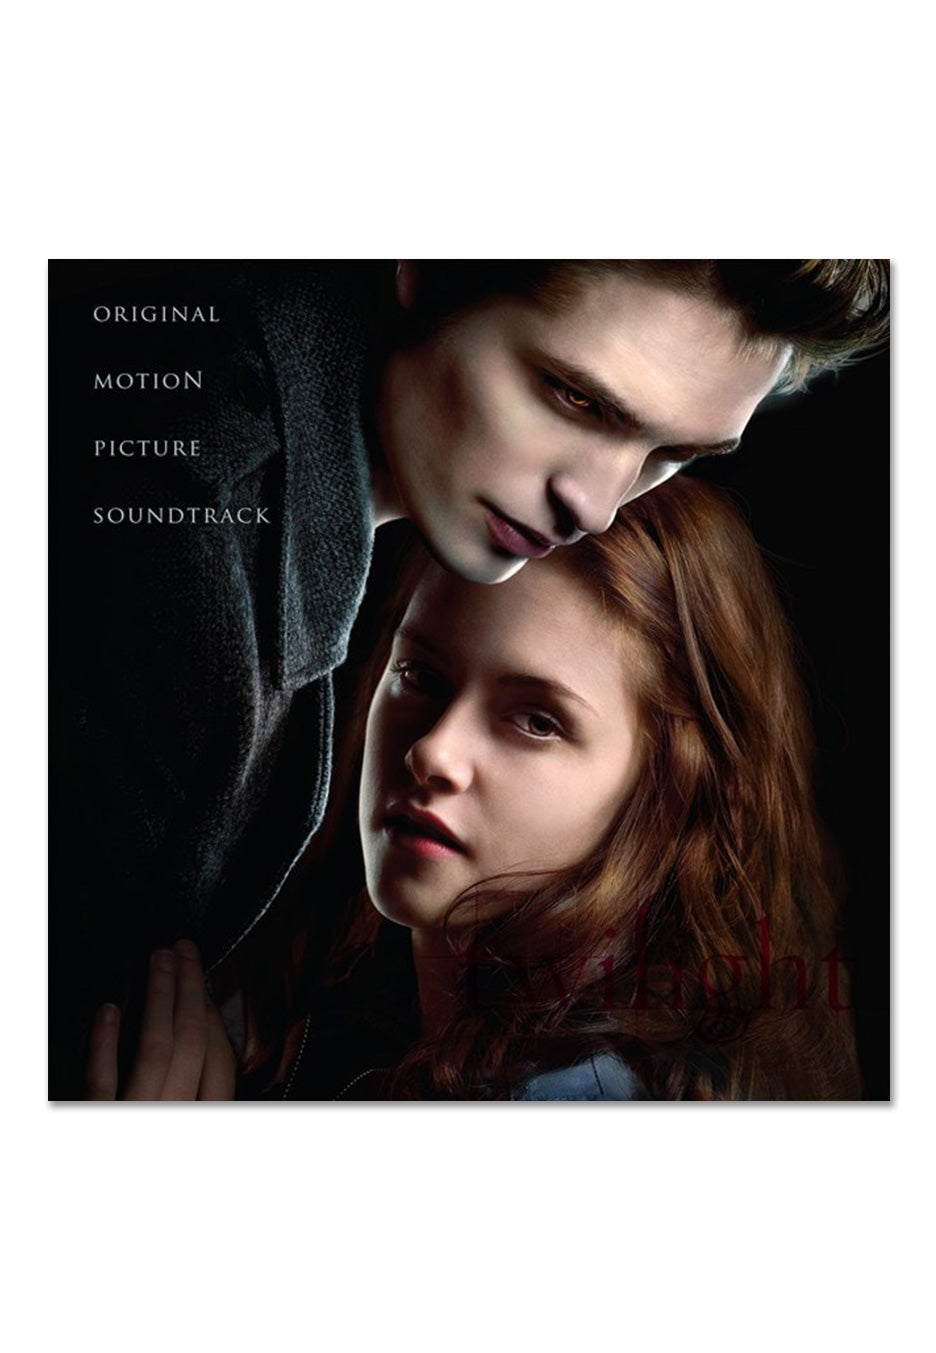 Twilight - Twilight OST Ltd. Grey Marbled - Colored Vinyl | Neutral-Image